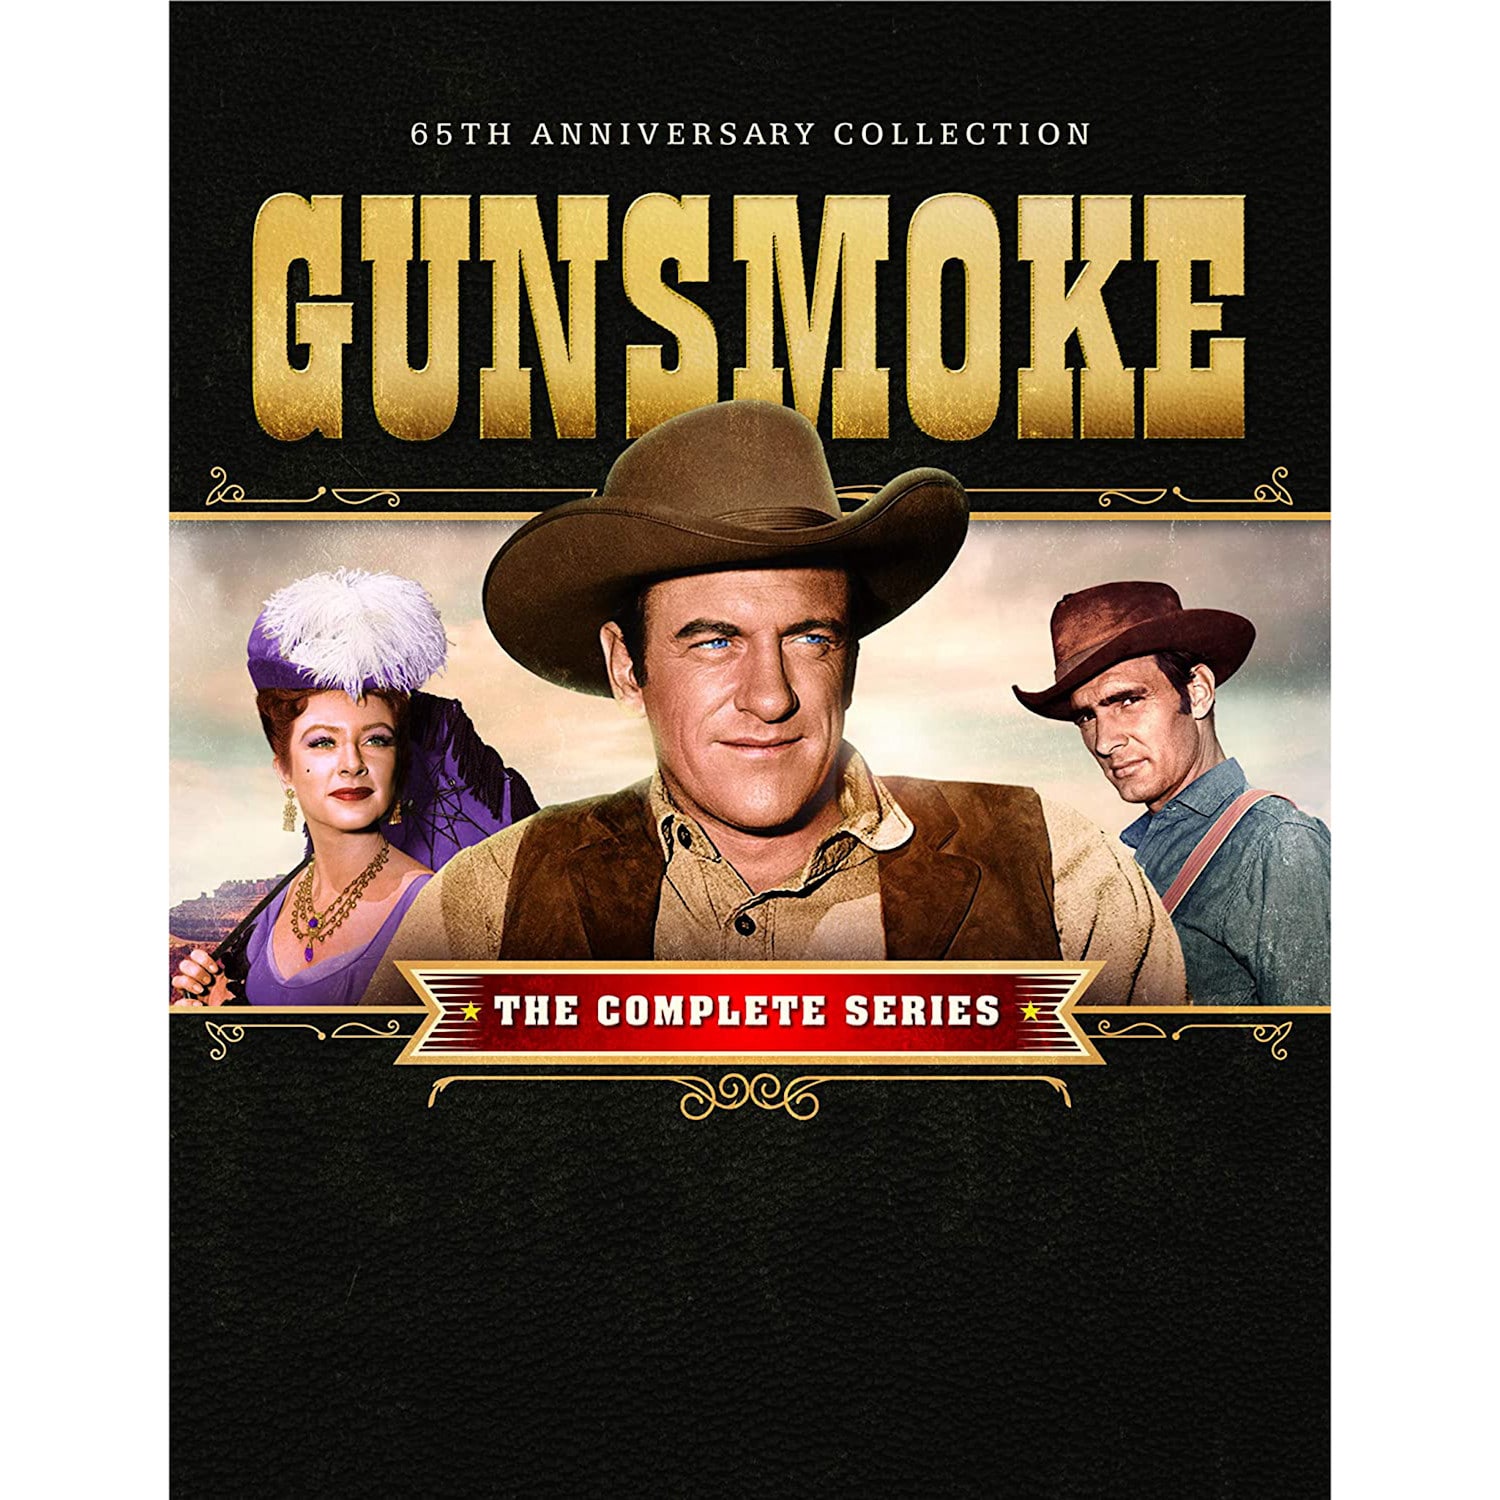 Gunsmoke Complete Series (DVD) - image 3 of 3